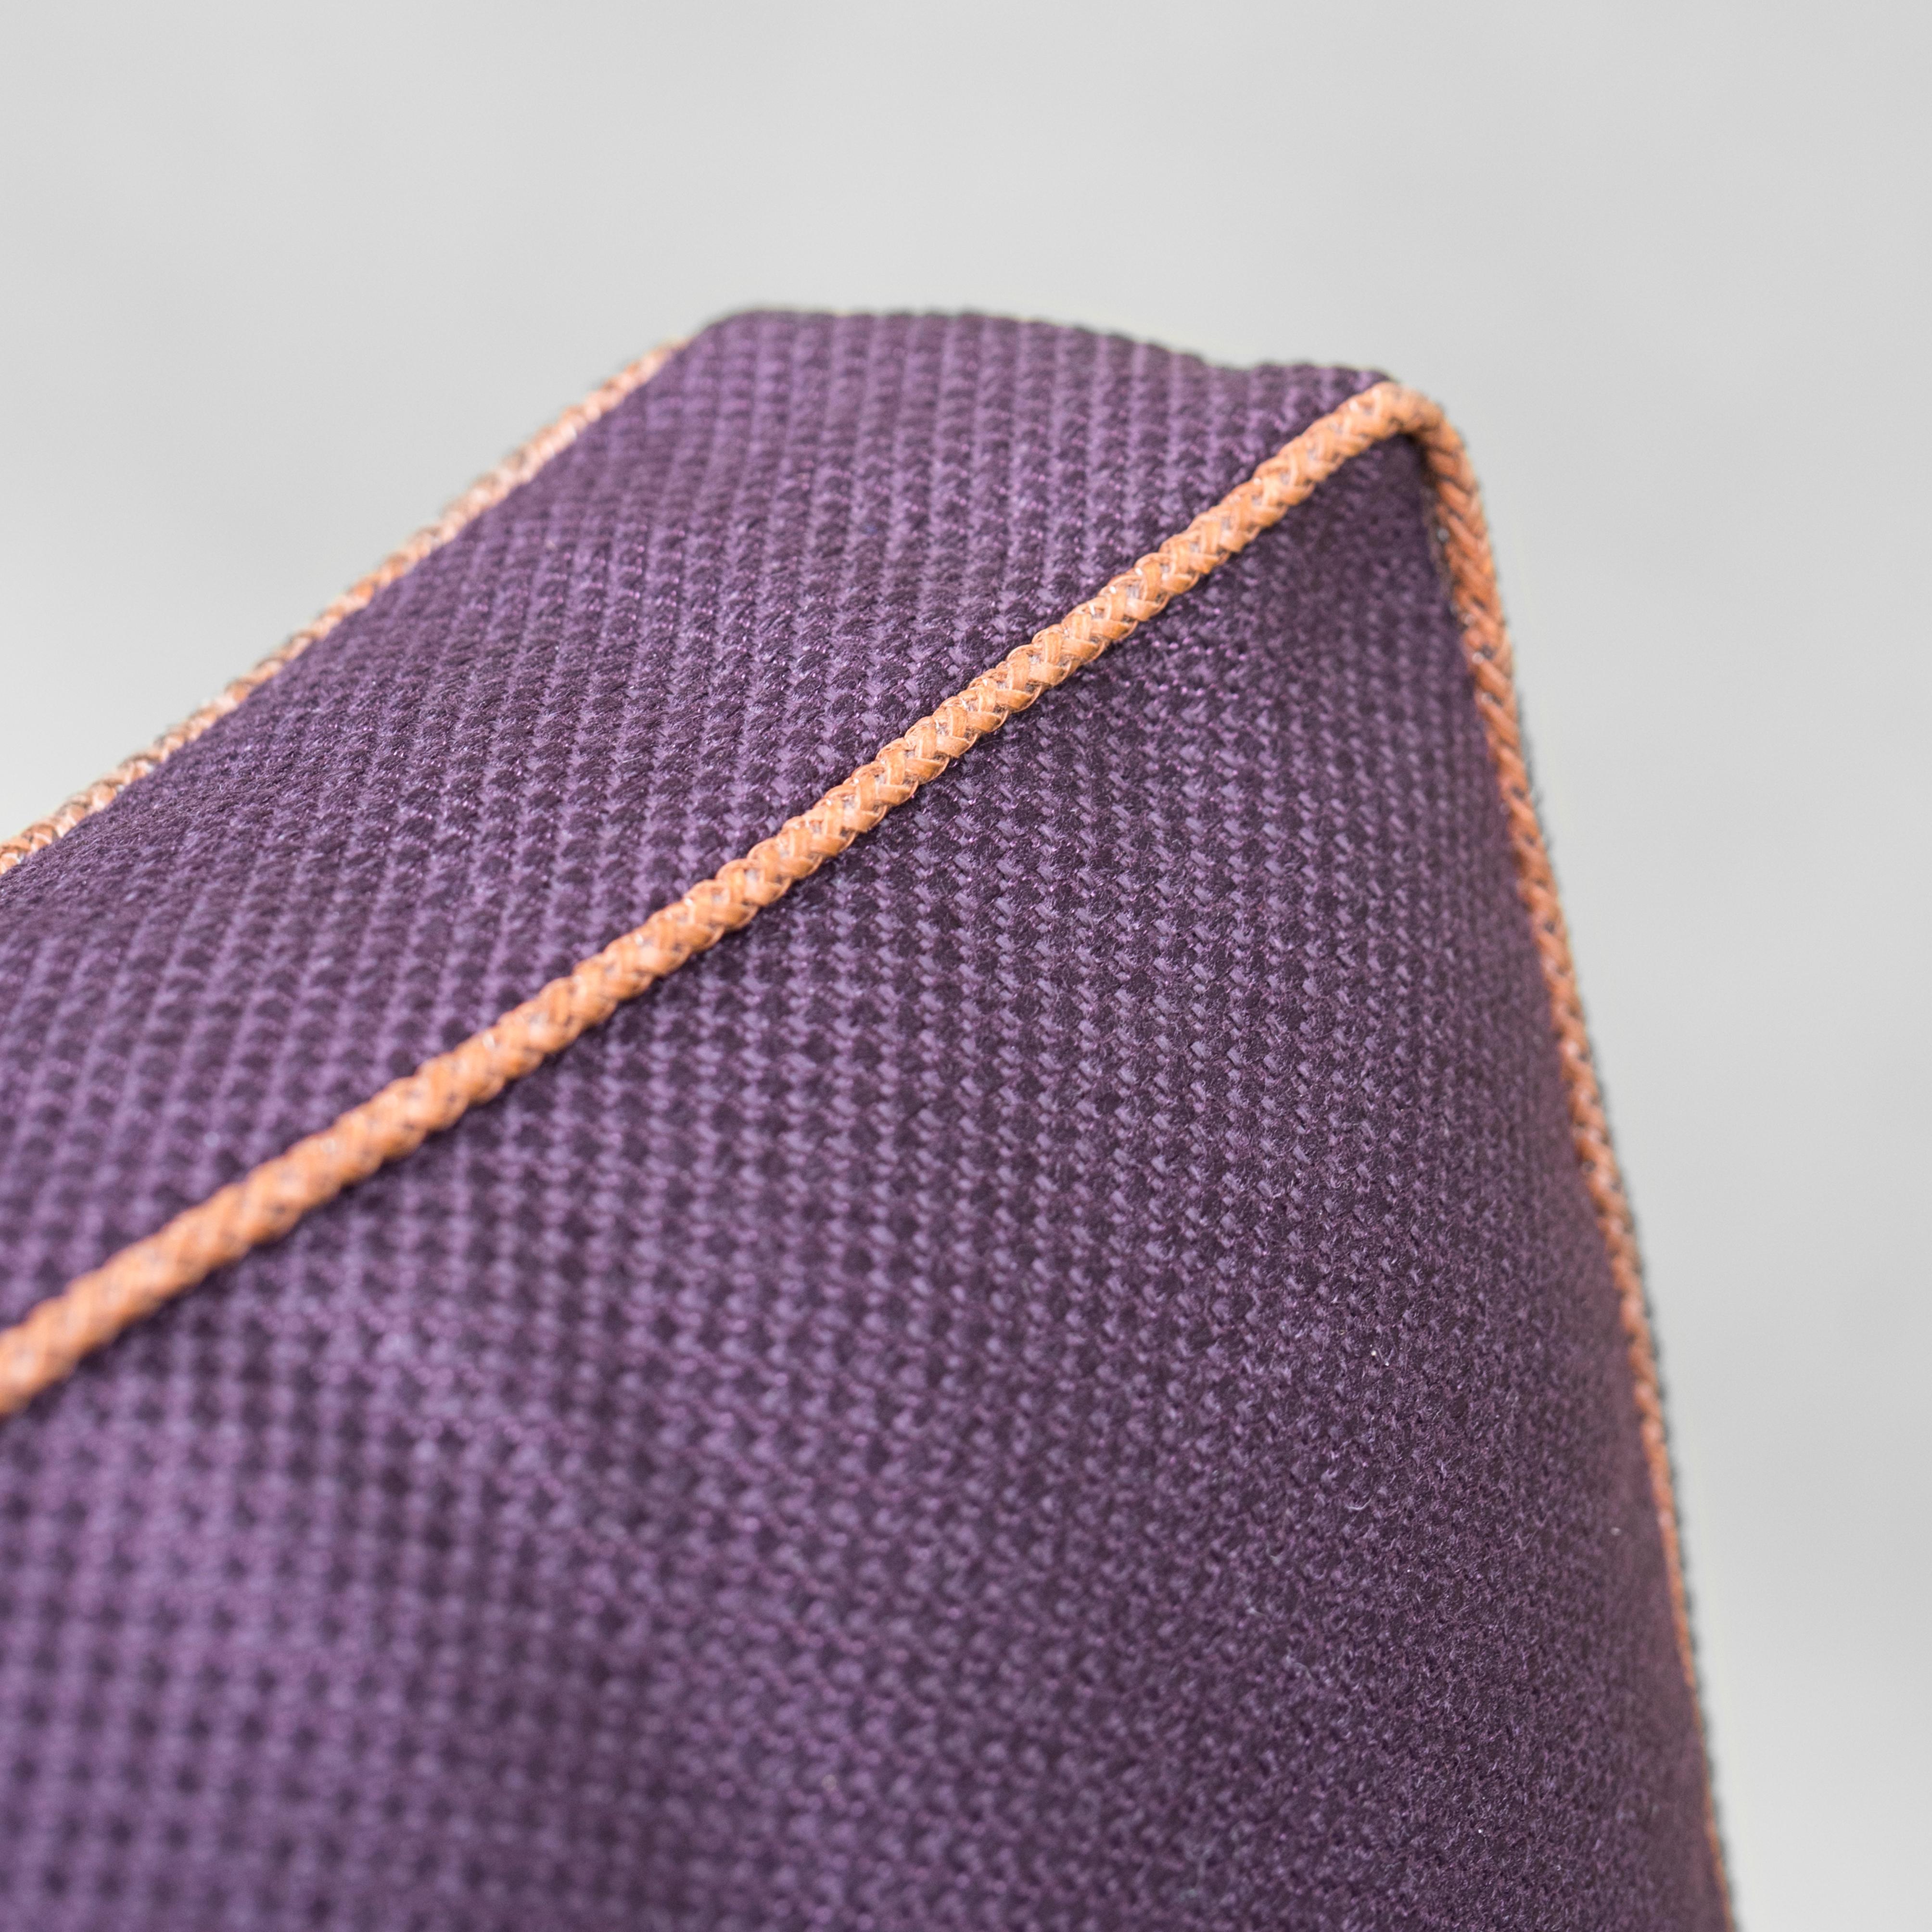 Peter Ghyczy Armchair Urban Brad 'GP01' Ristretto / Purple Fabric 1